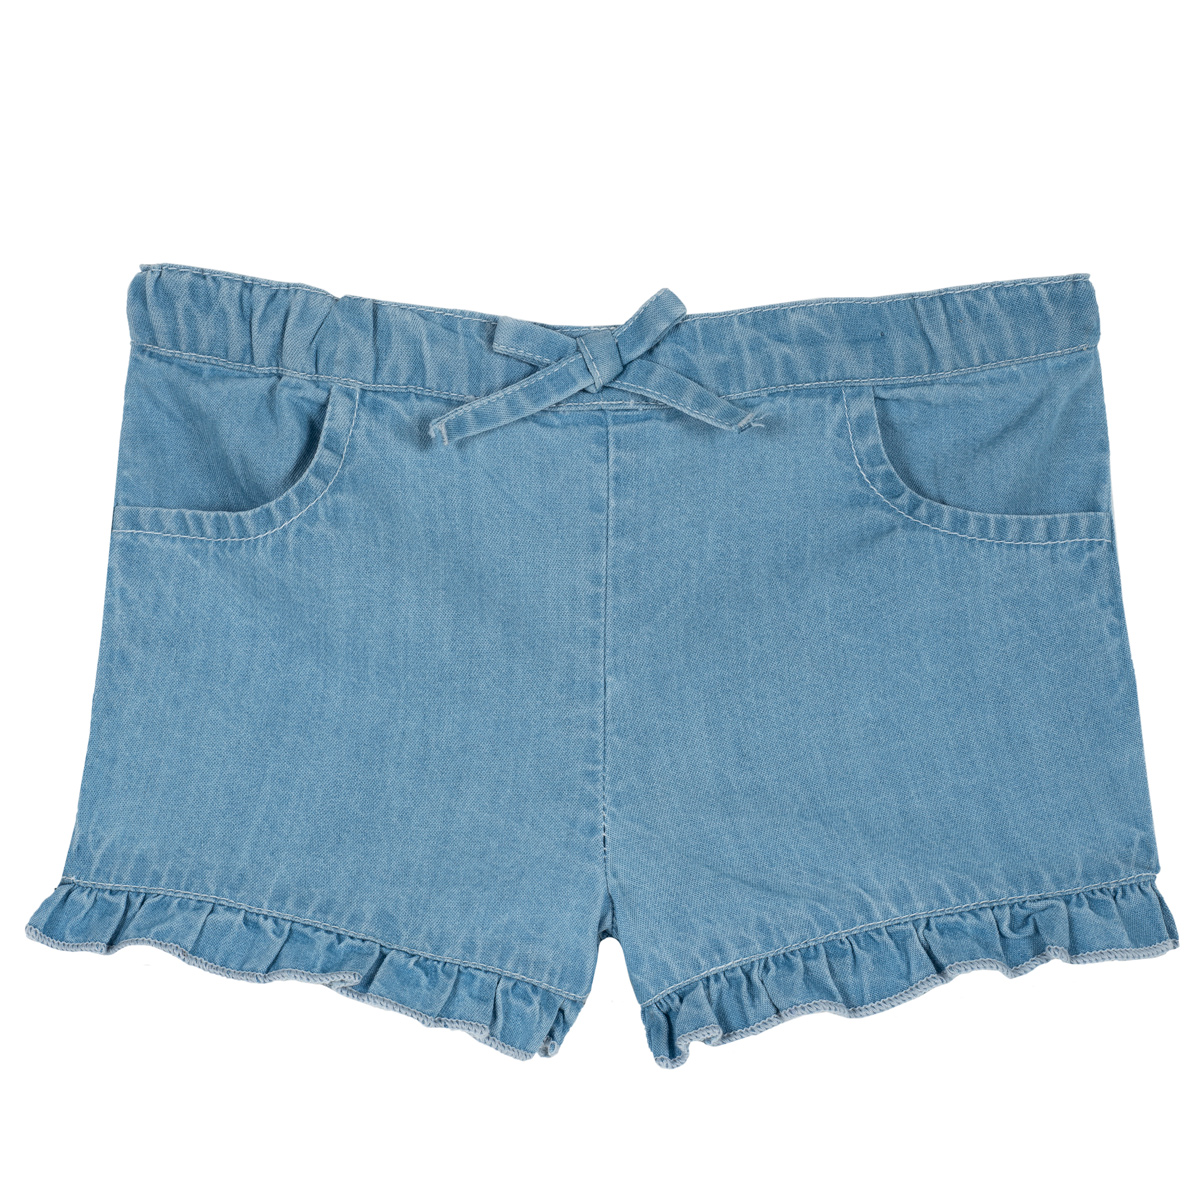 Pantaloni copii Chicco, scurti, denim, 52851